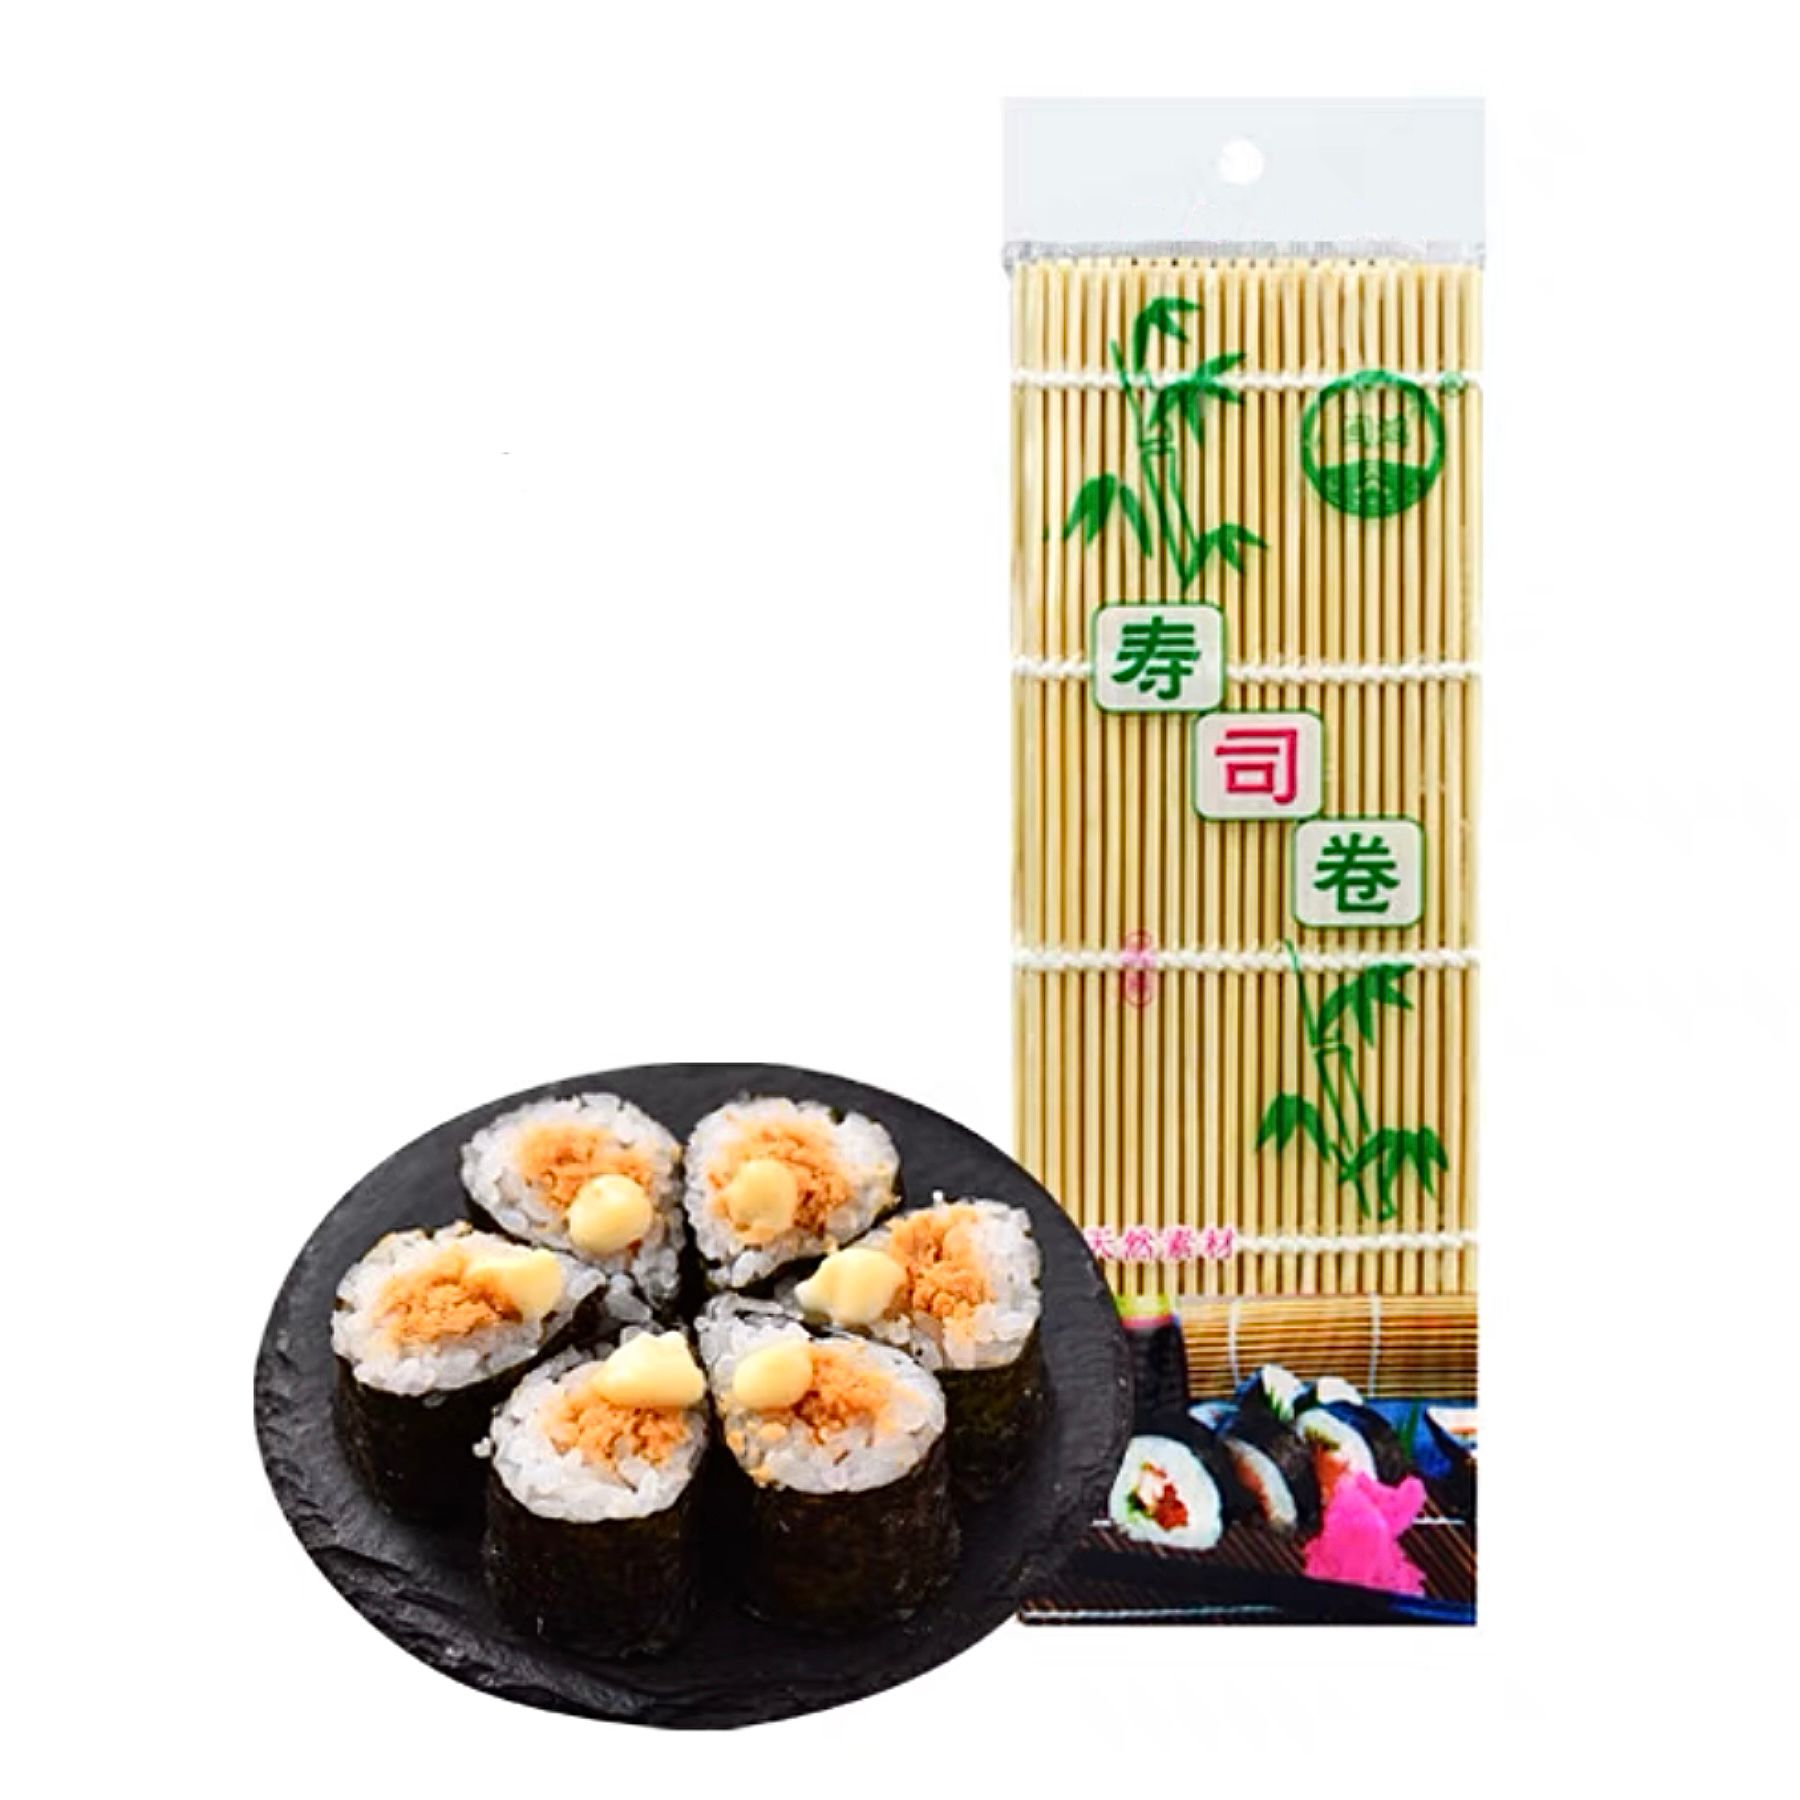 Bambusrolle for Sushi 24x24cm